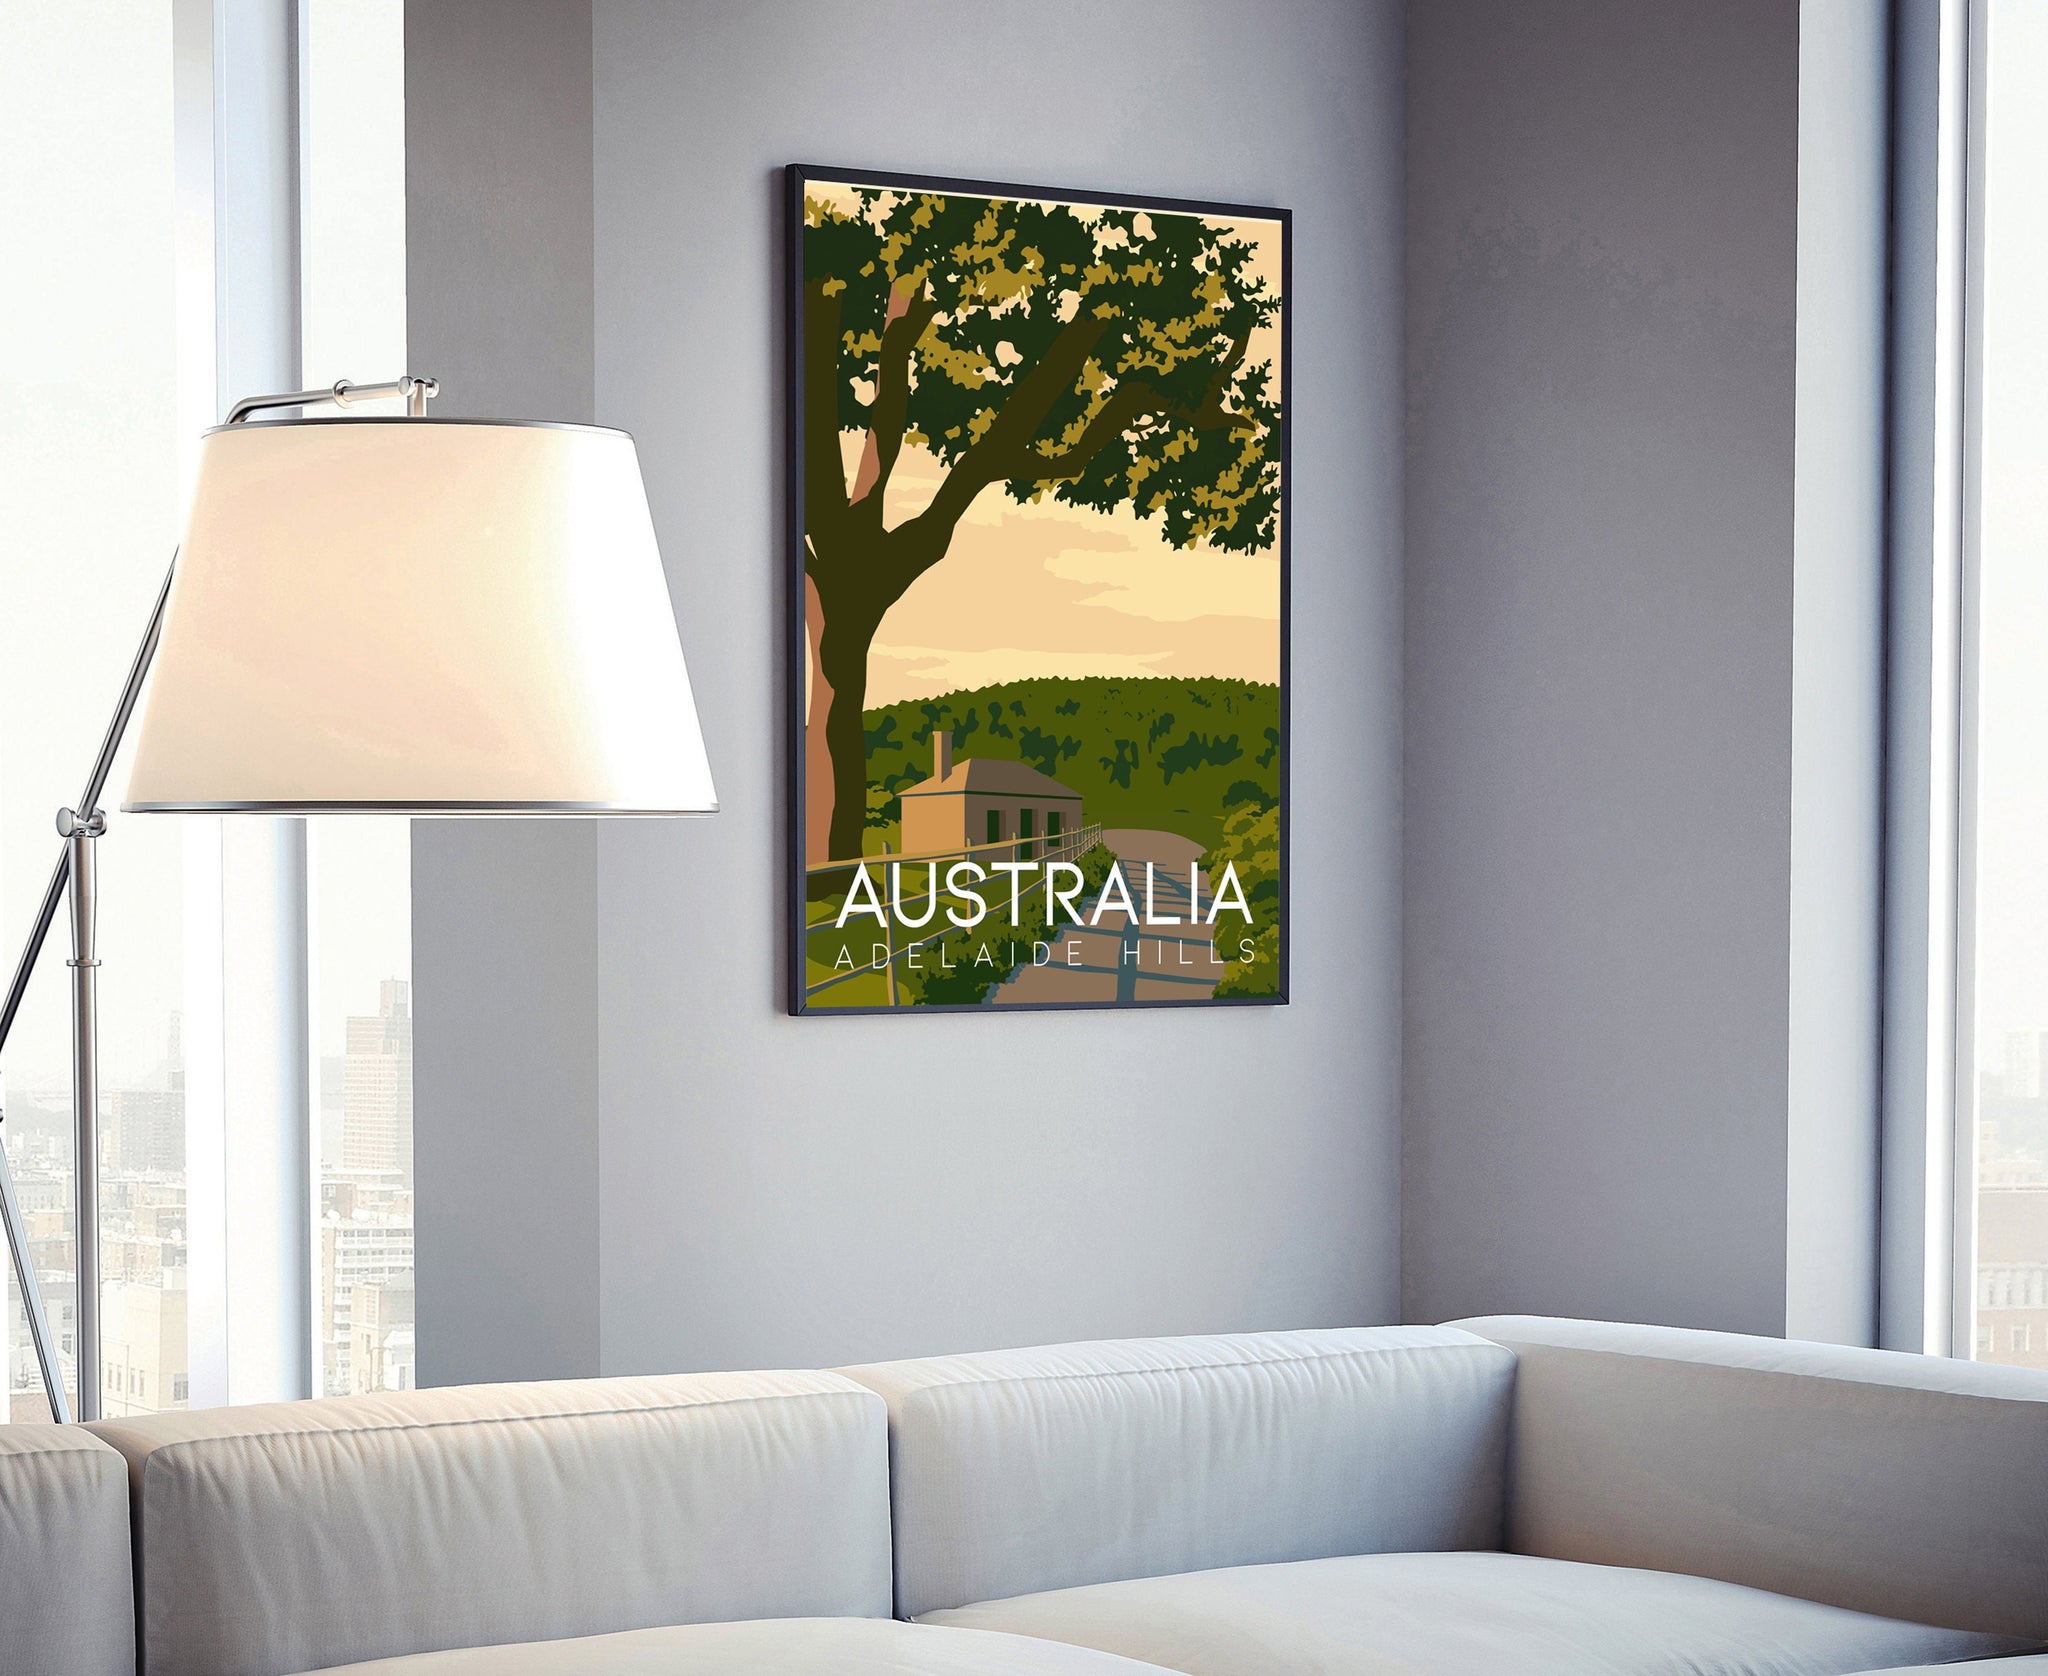 AUSTRALIA retro style travel poster, Adelaide Hills cityscape poster artwork, Australia landmark poster wall art, Office wall decoration